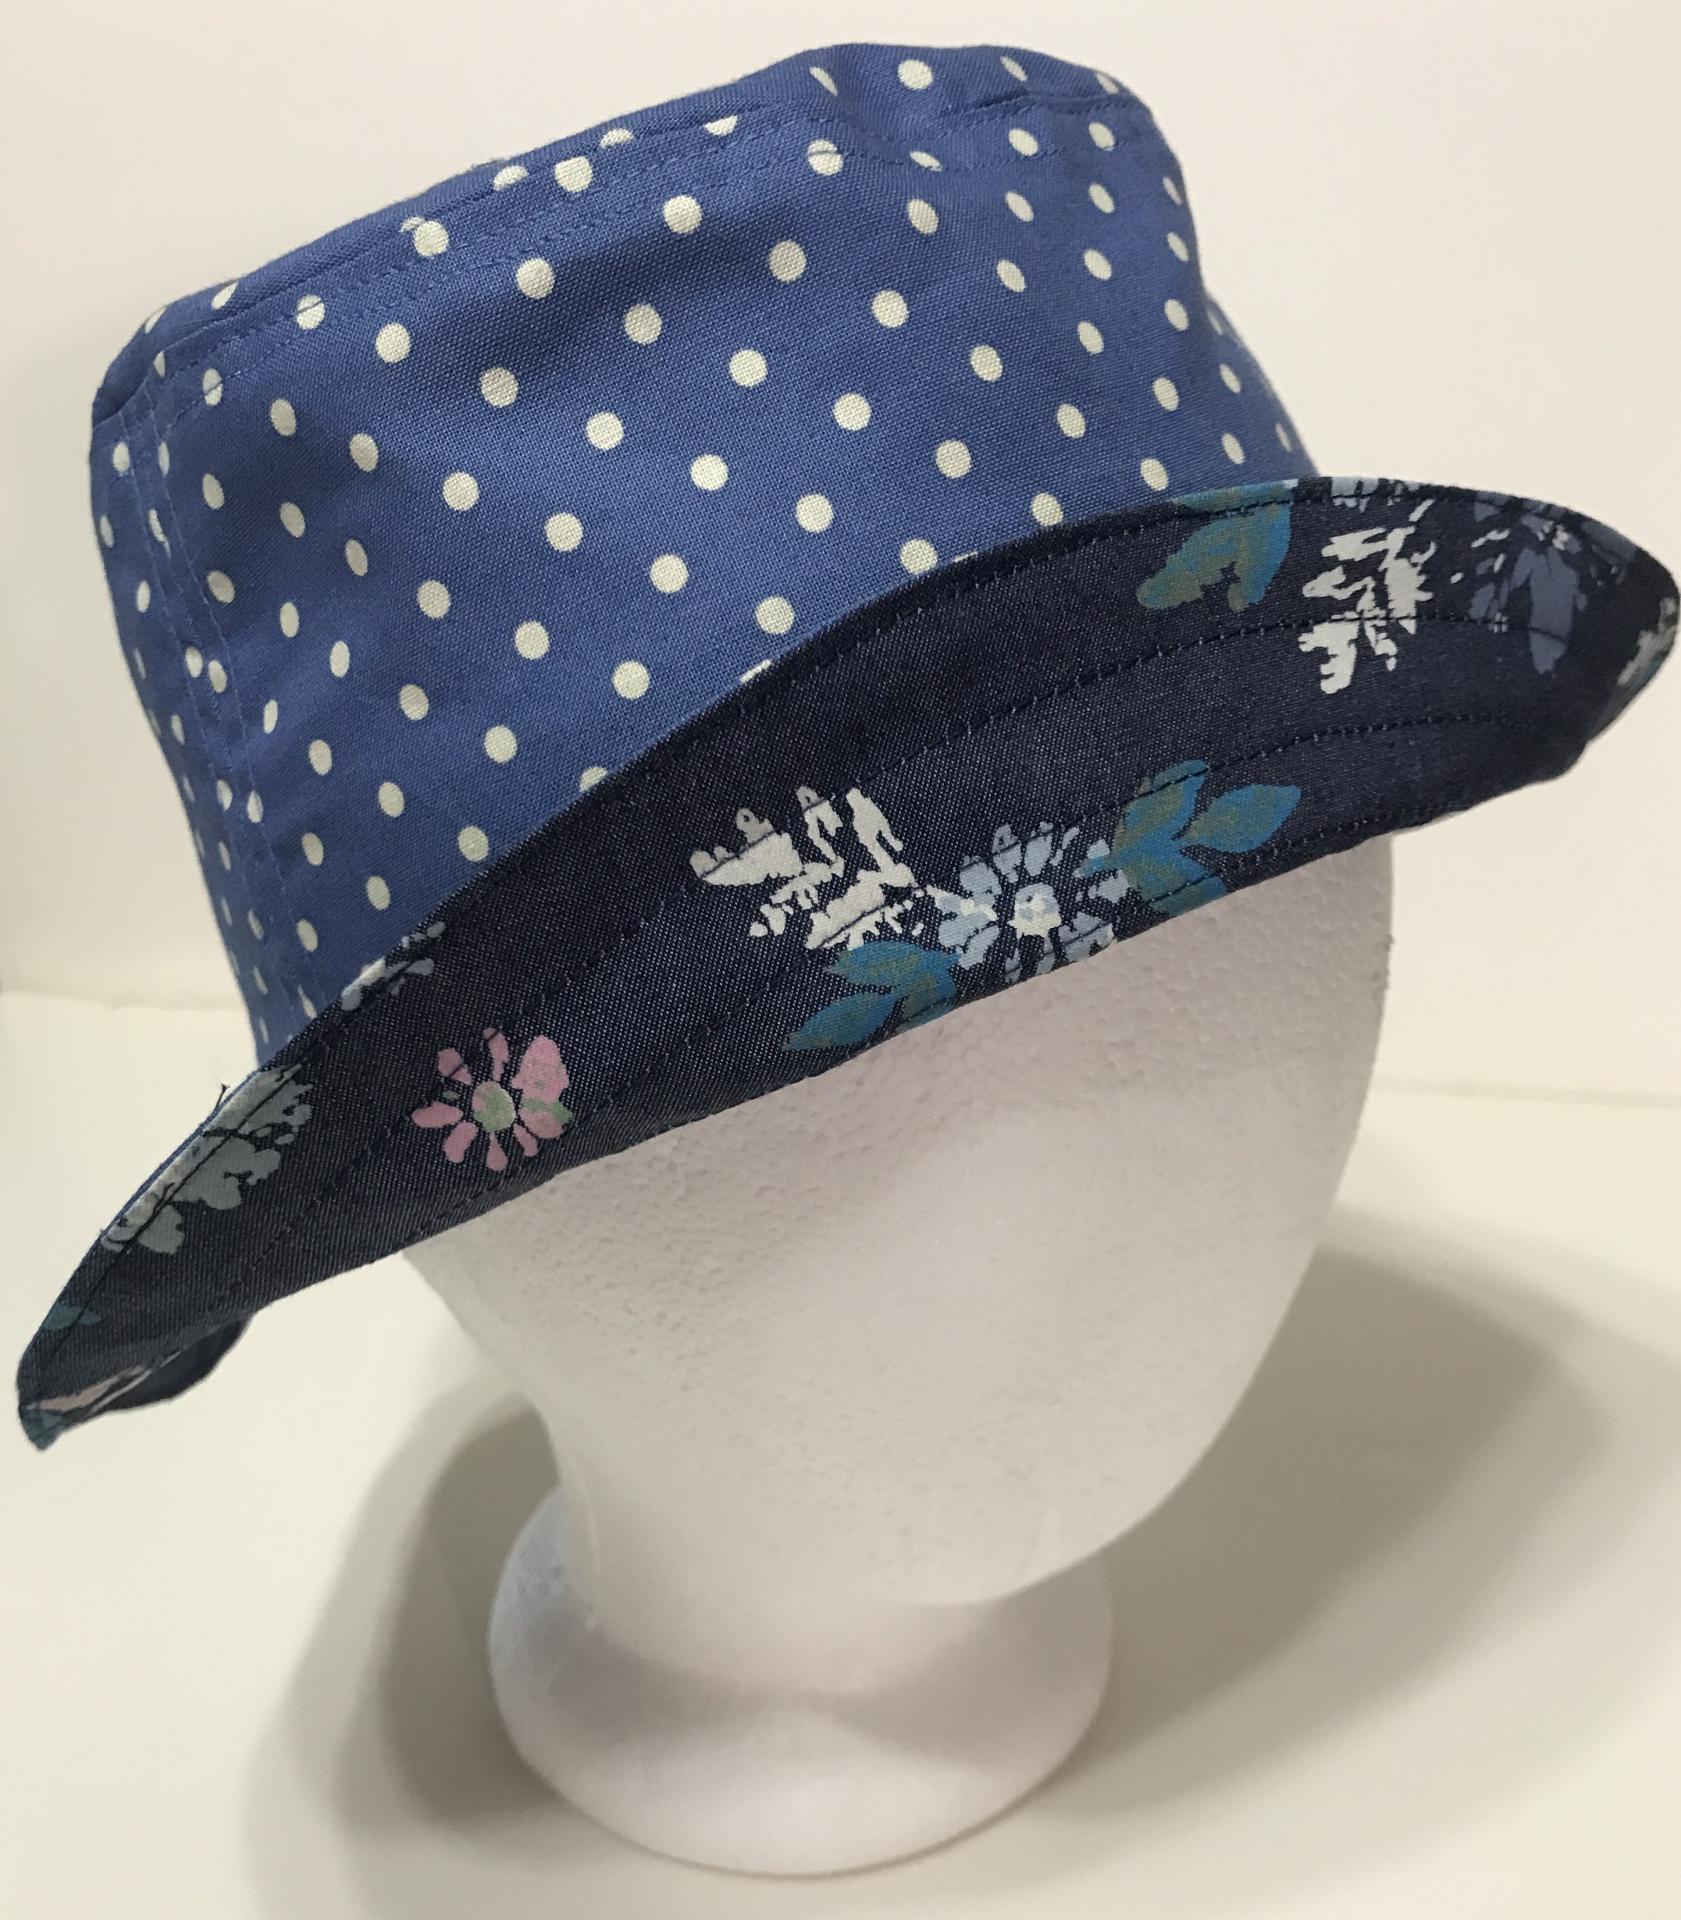 Floral Denim Bucket Hat, Reversible, Sizes S-XXL, Cotton, floppy hat, gardening hat, sun hat, casual hat, woman's fishing hat, polka dots, adults or older children